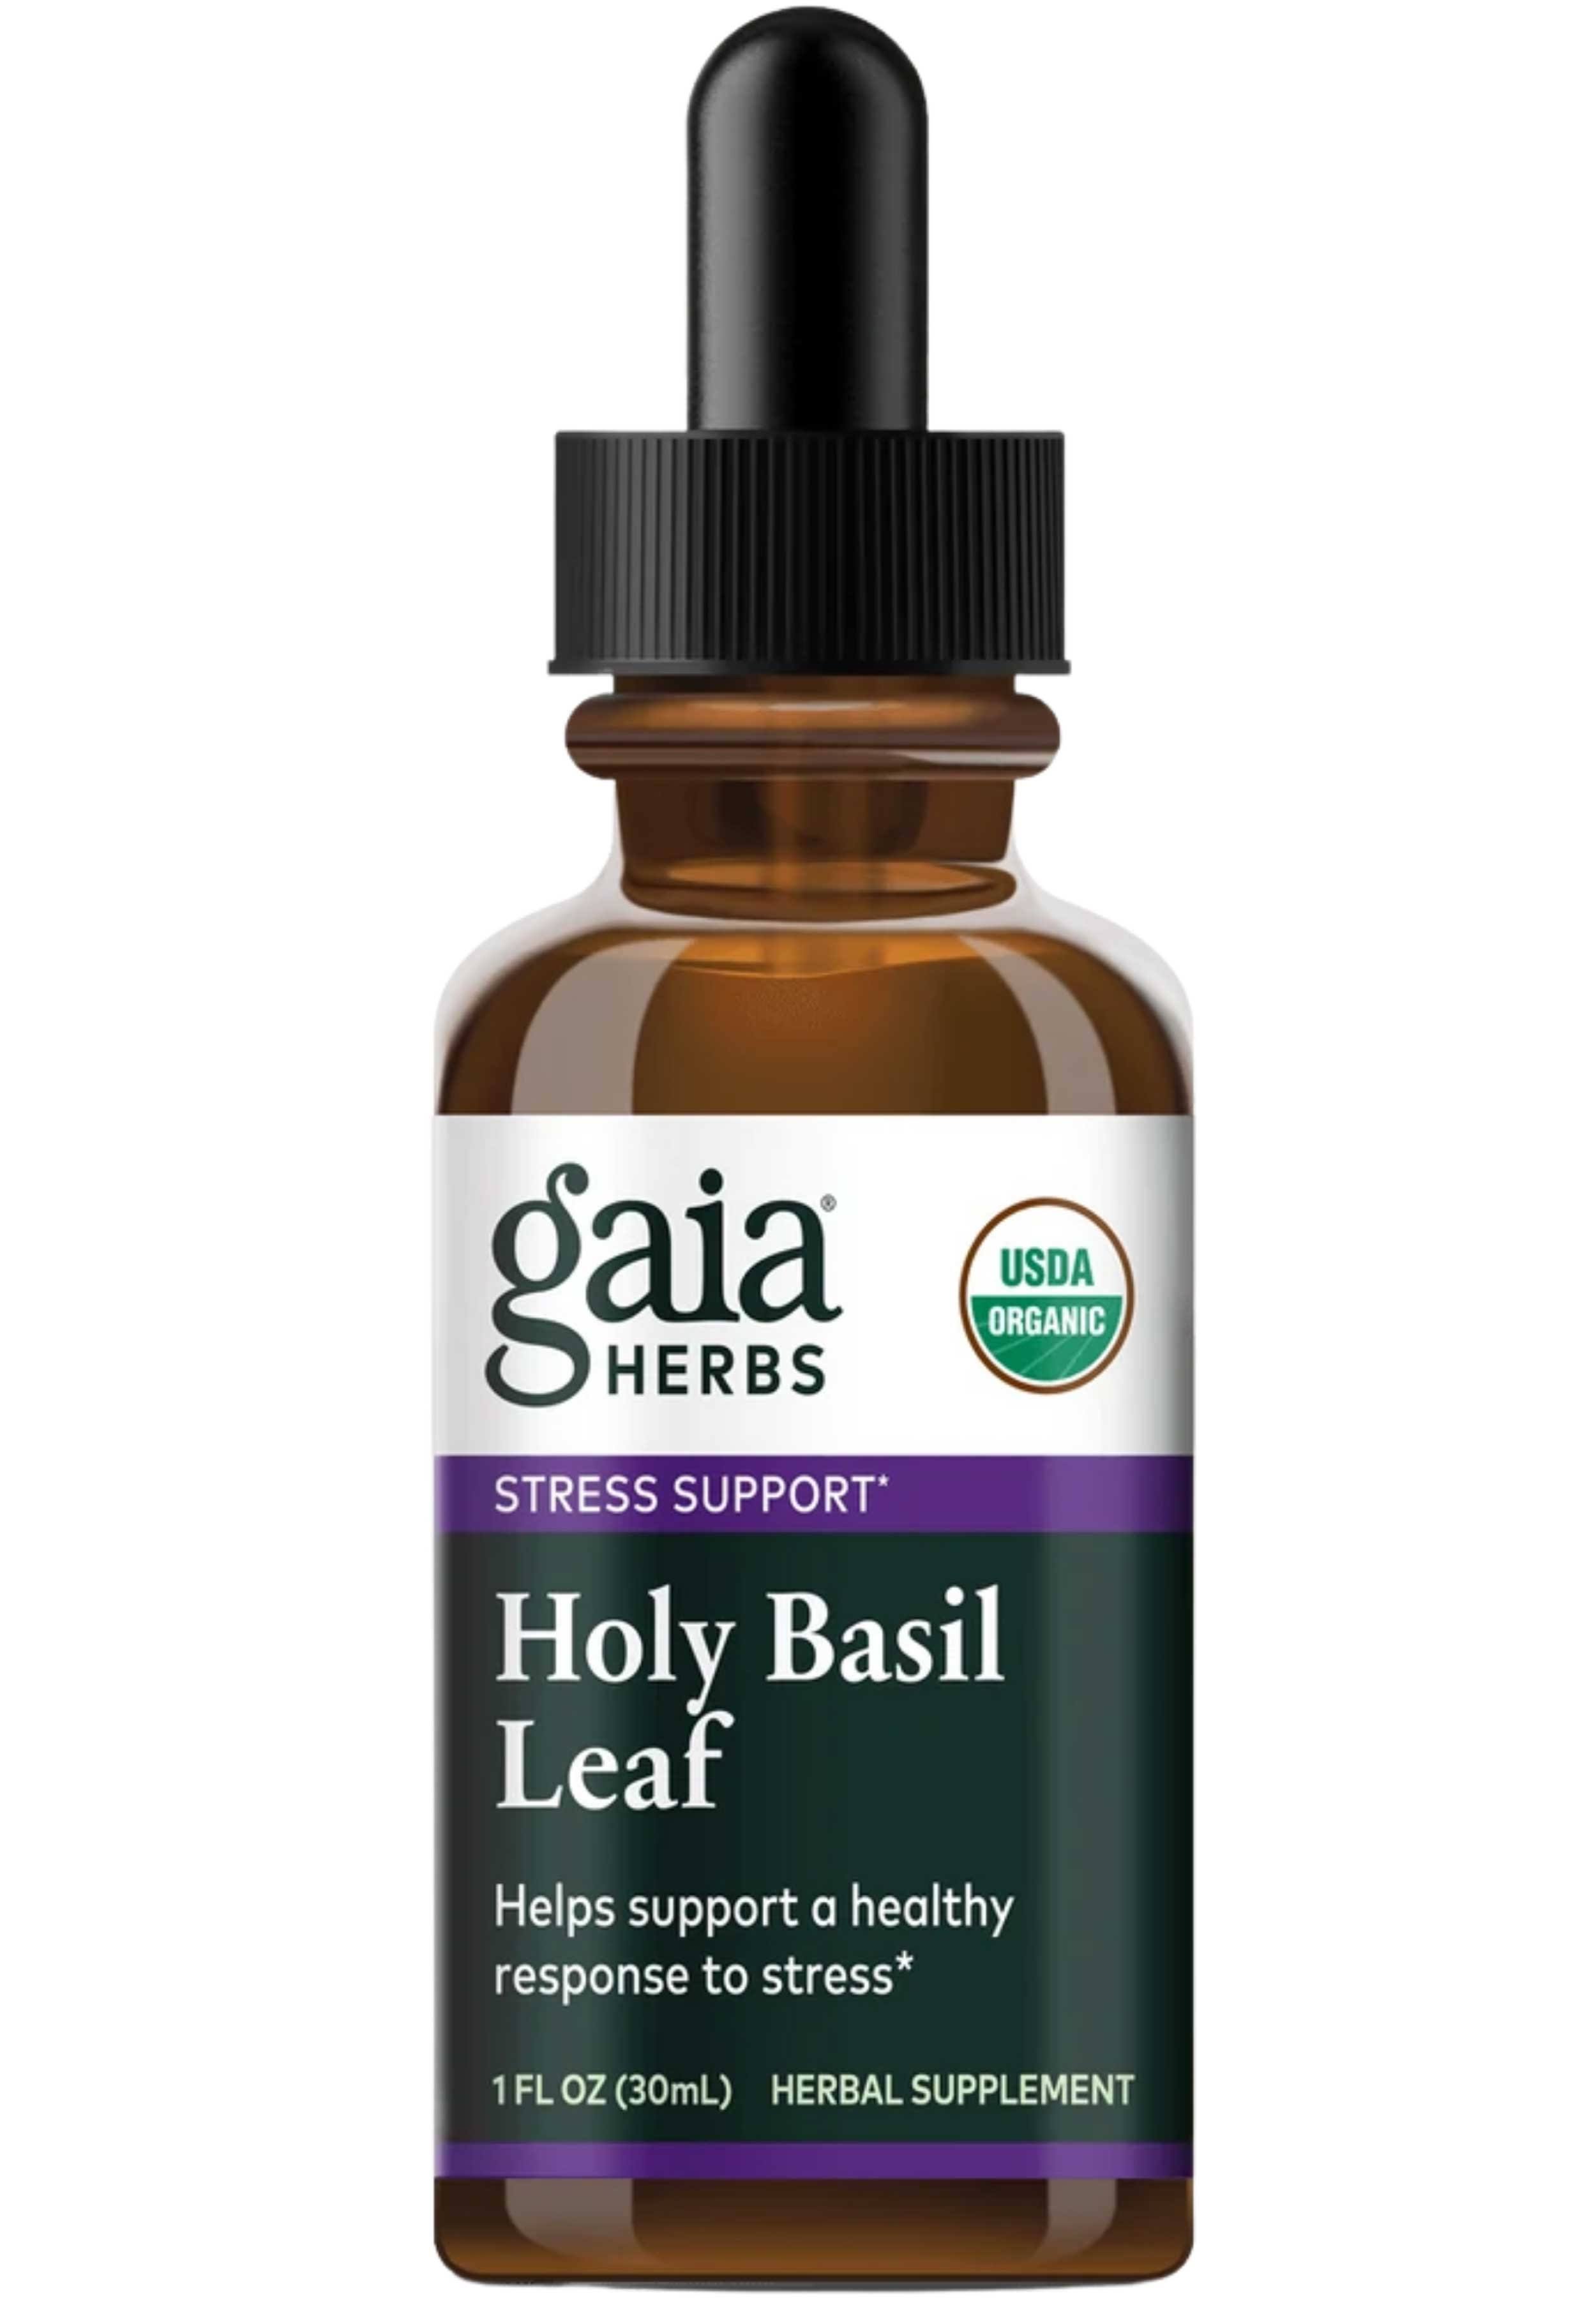 Gaia Herbs Holy Basil Leaf Supplement